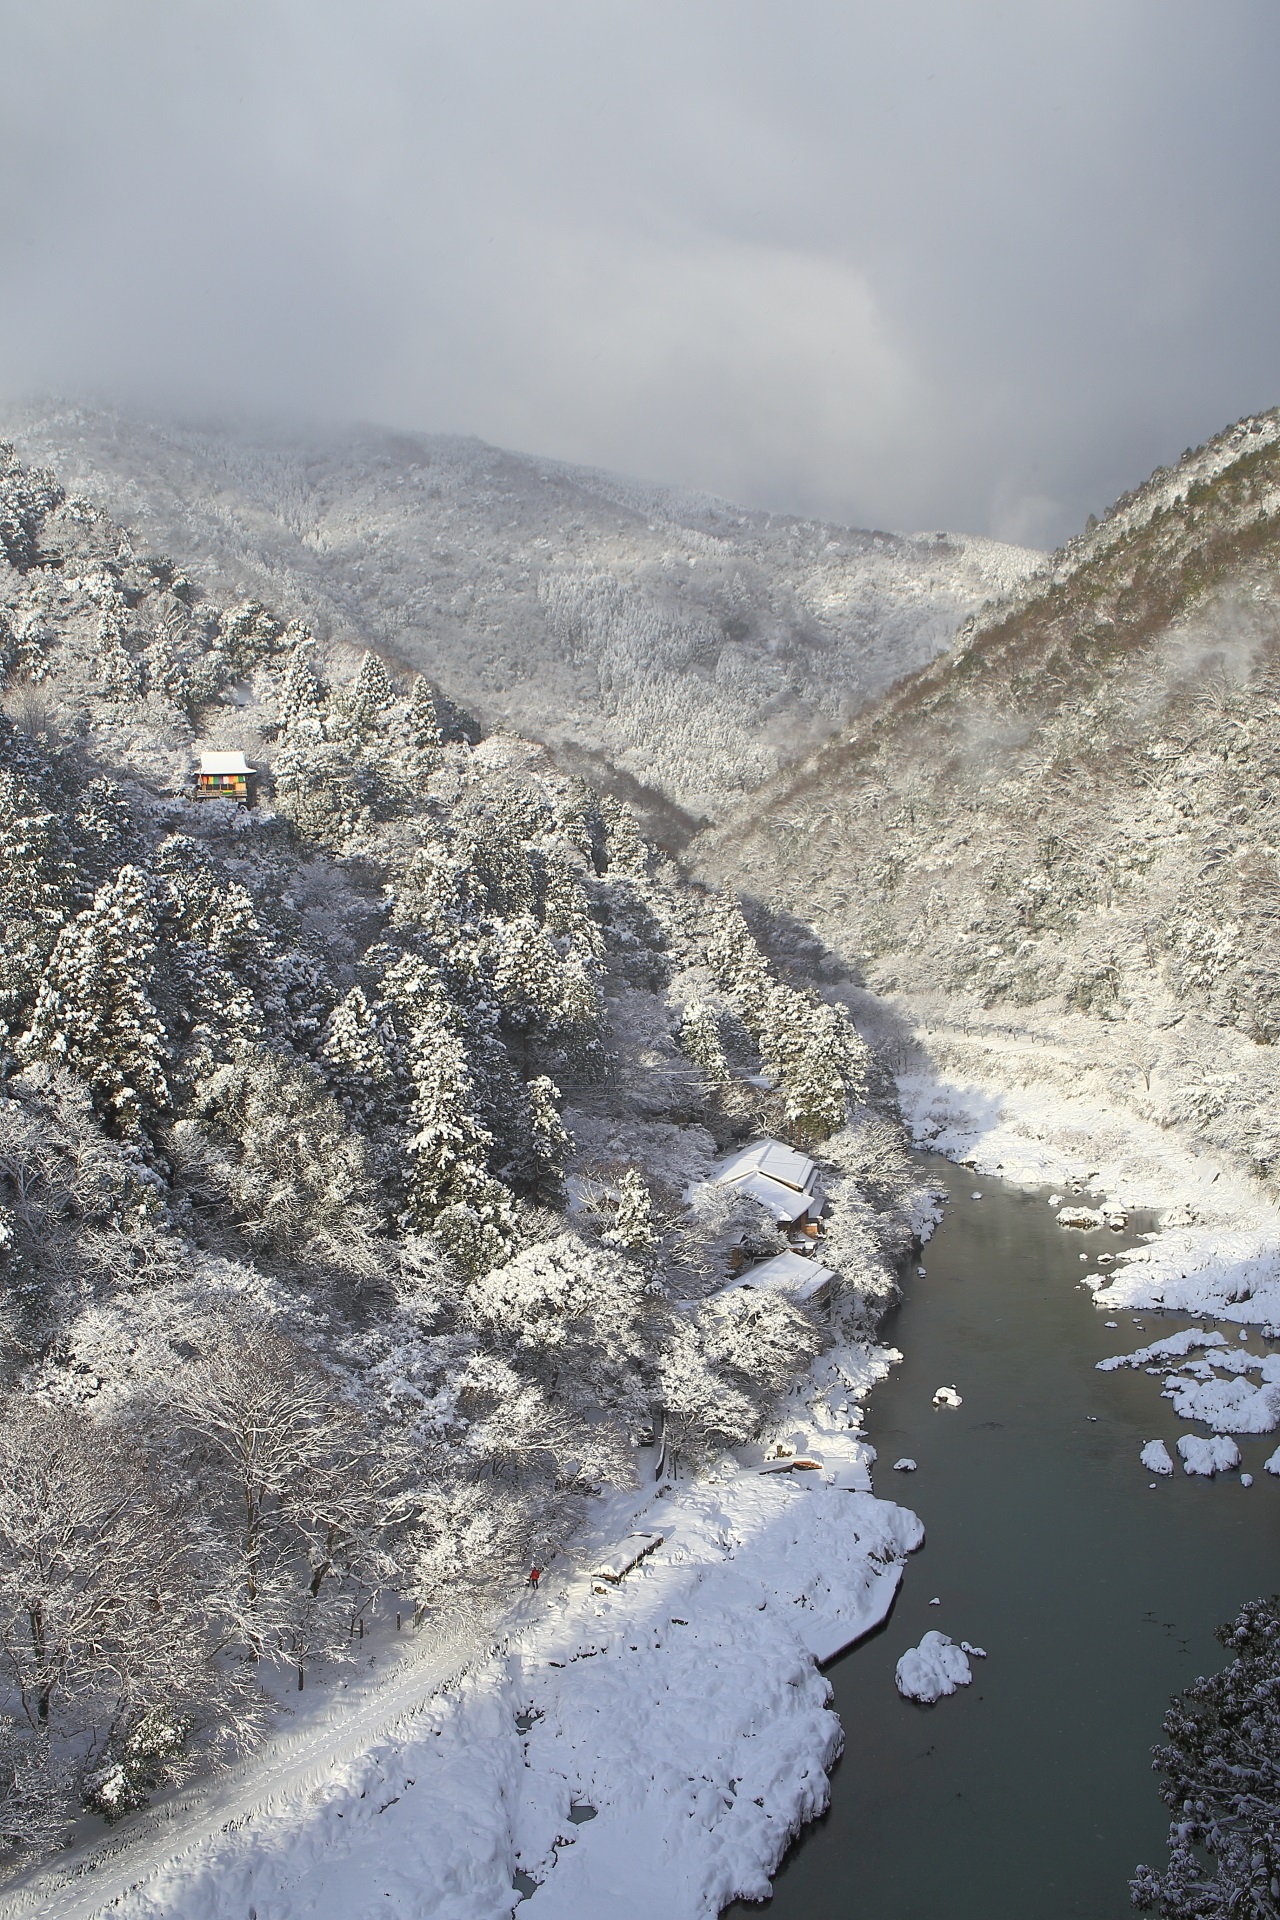 Kyoto Arashiyama snowy landscape